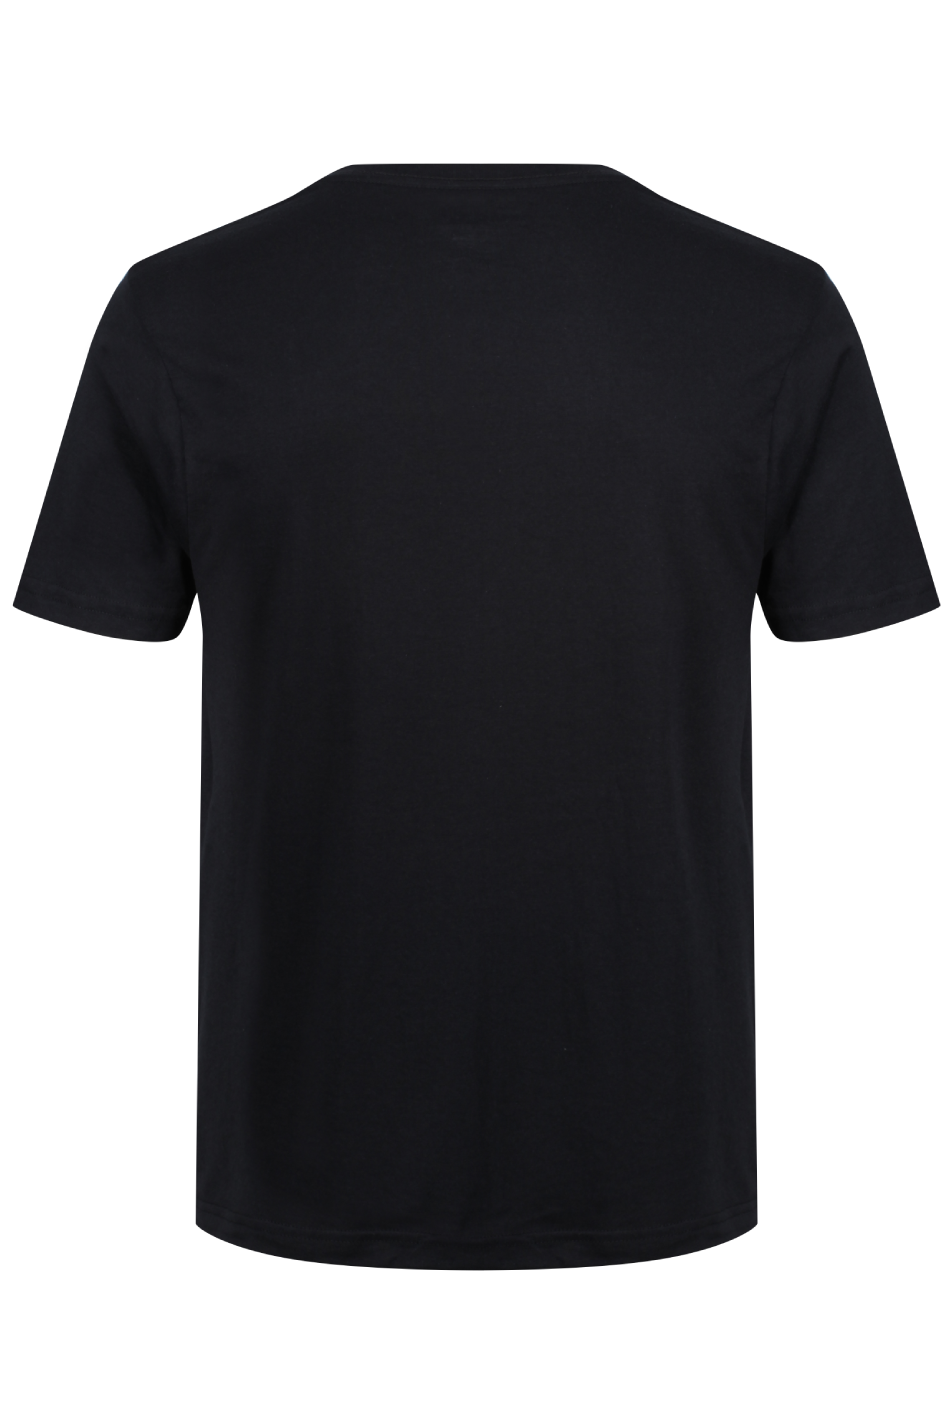 Reebok Santo 3 Pack Men's T-Shirt